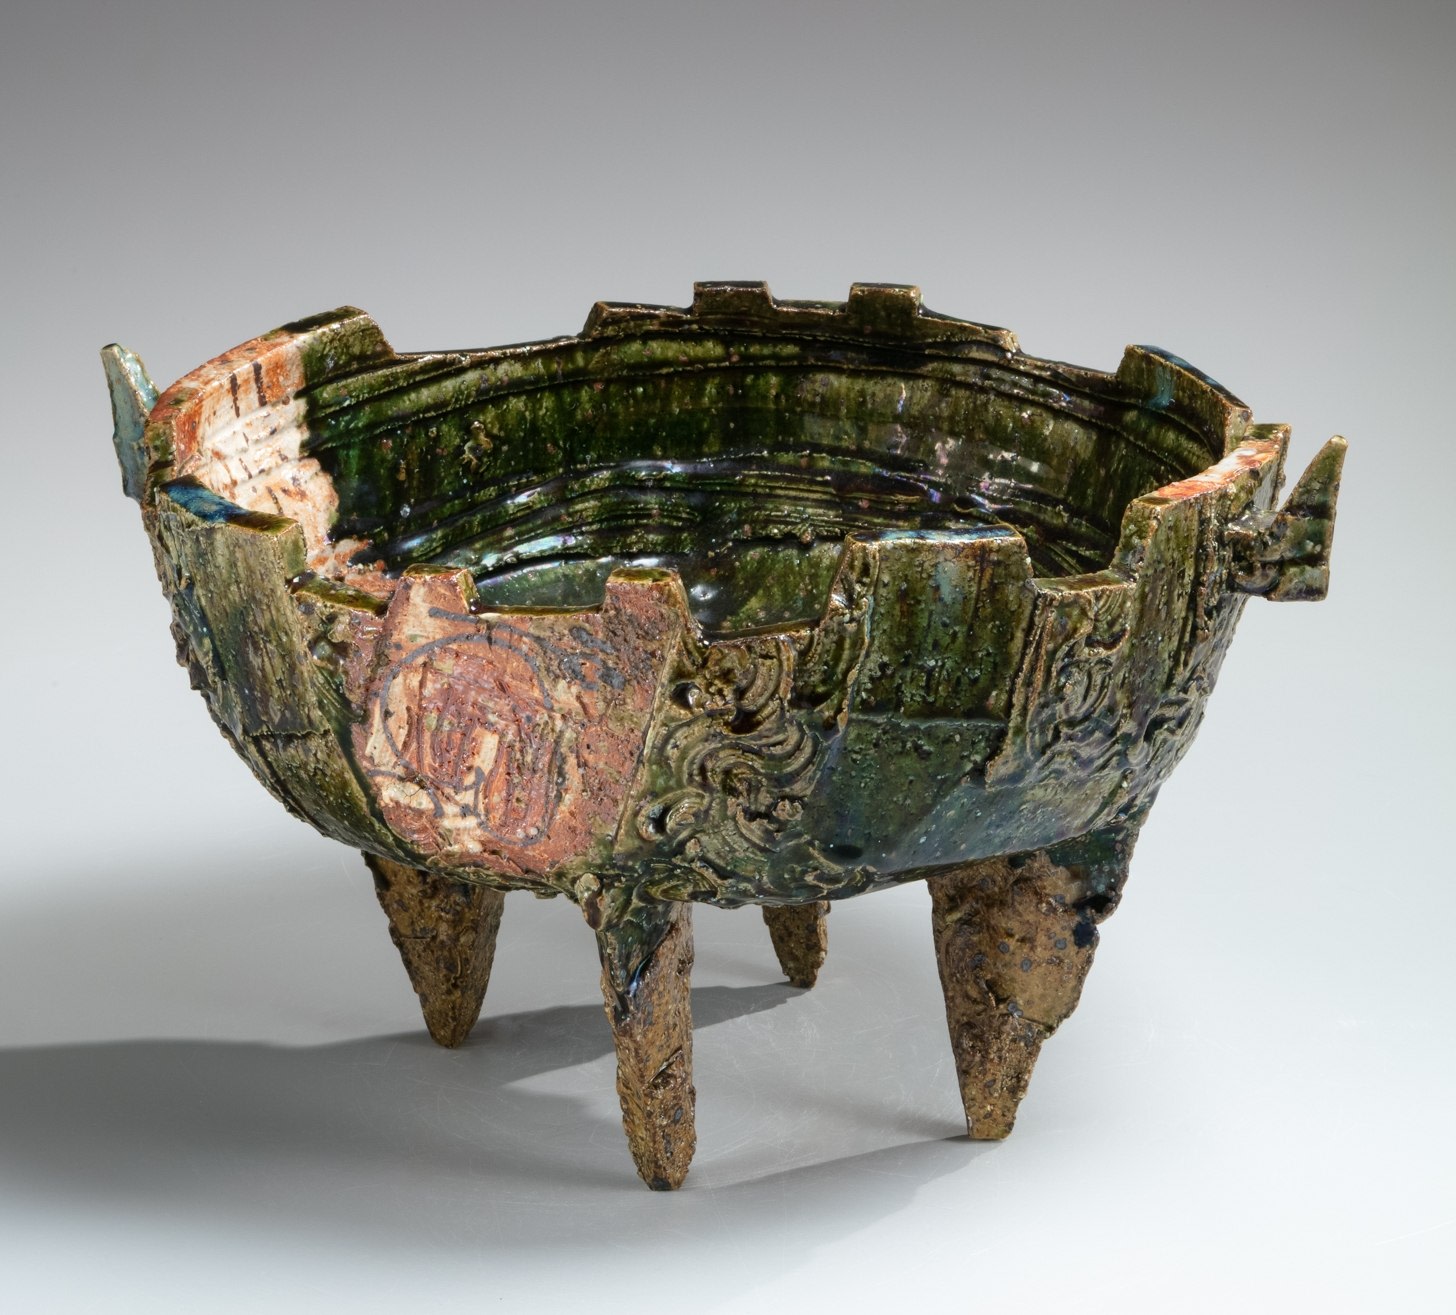 PAINTED CLAY - Wada Morihiro and Modern Ceramics of Japan - Exhibitions - Joan B Mirviss LTD | Japanese Fine Art | Japanese Ceramics